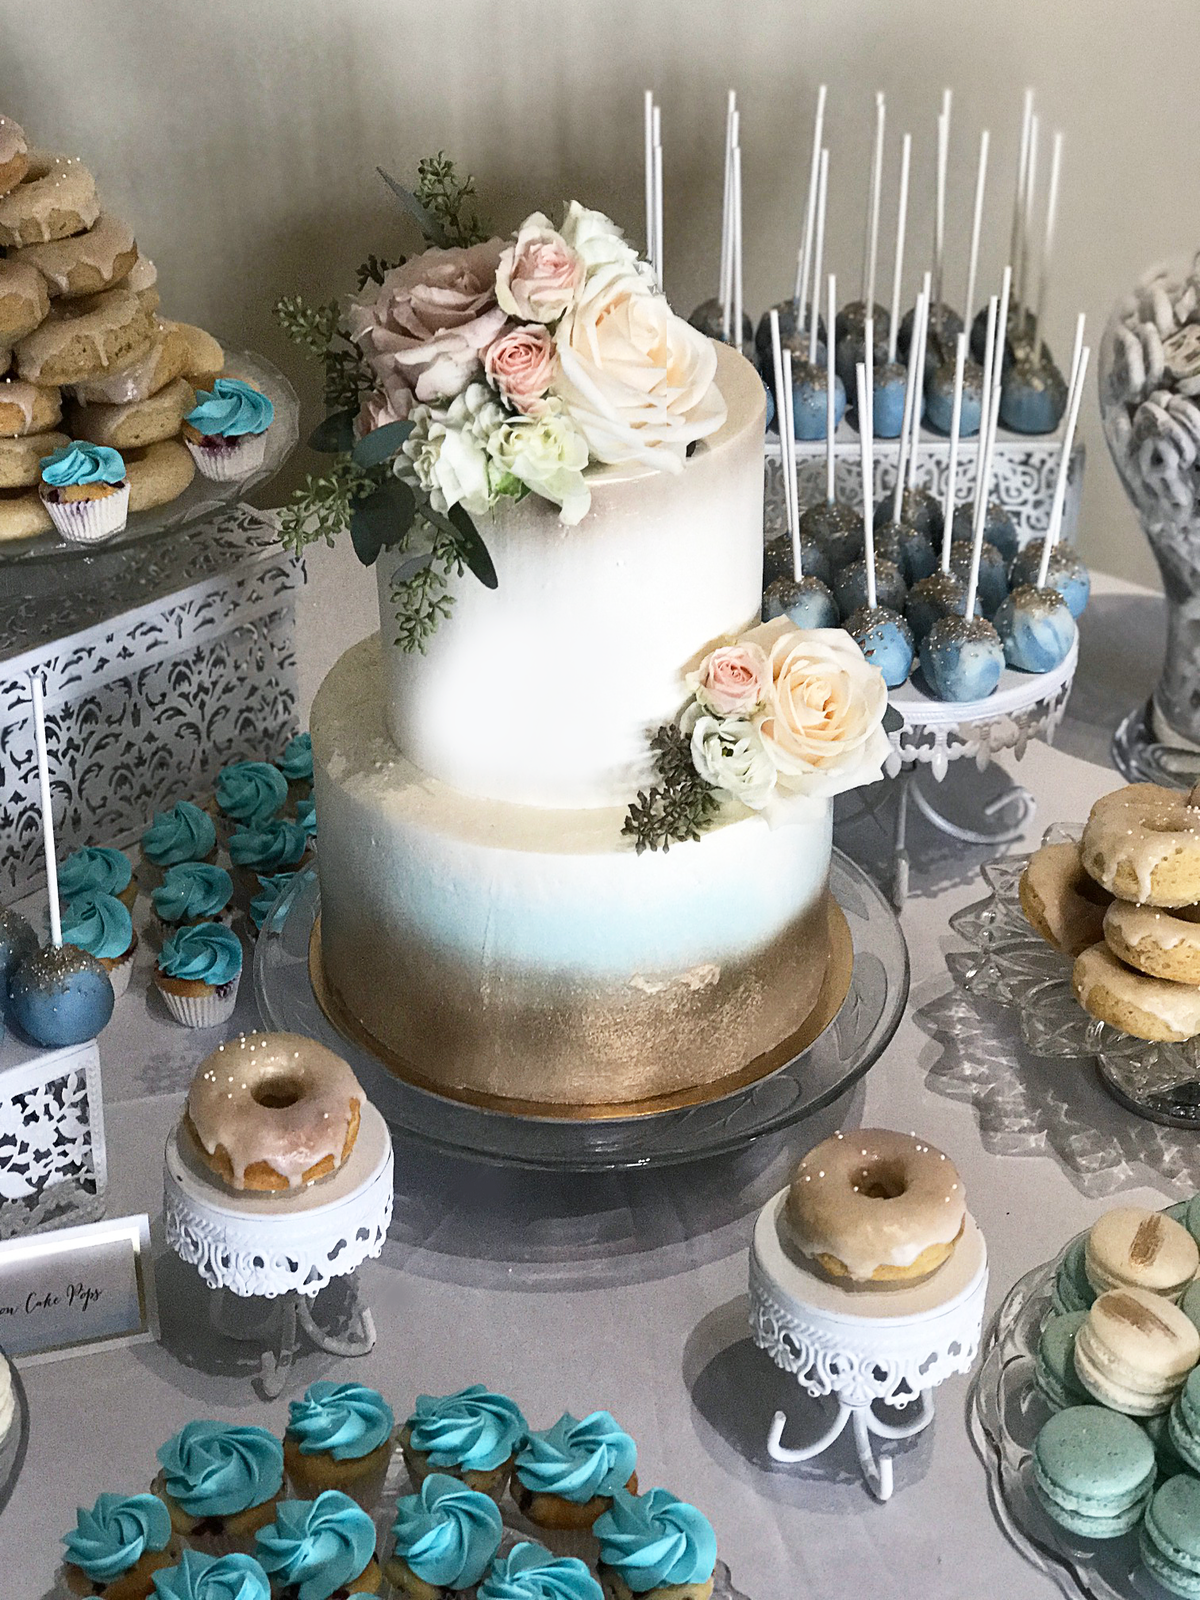 Whippt Desserts Wedding Cake Oct 2017